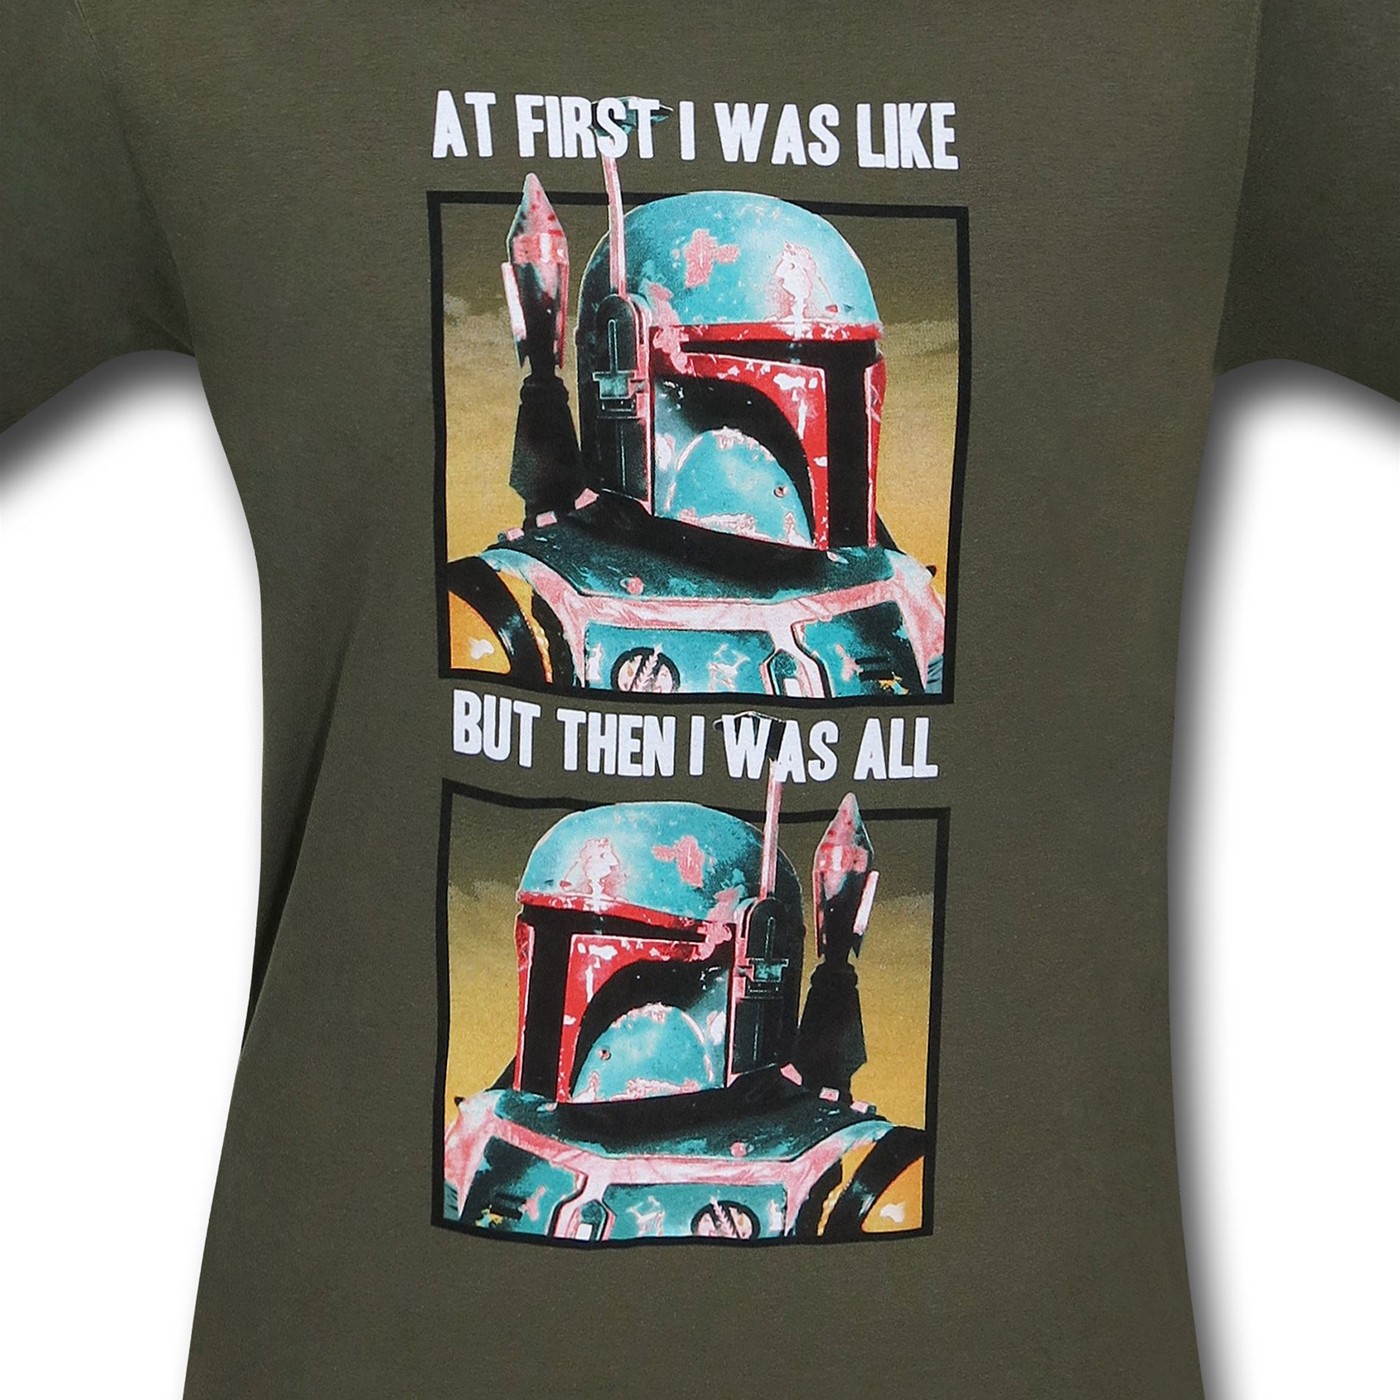 Star Wars Fett At First 30 Single T-Shirt